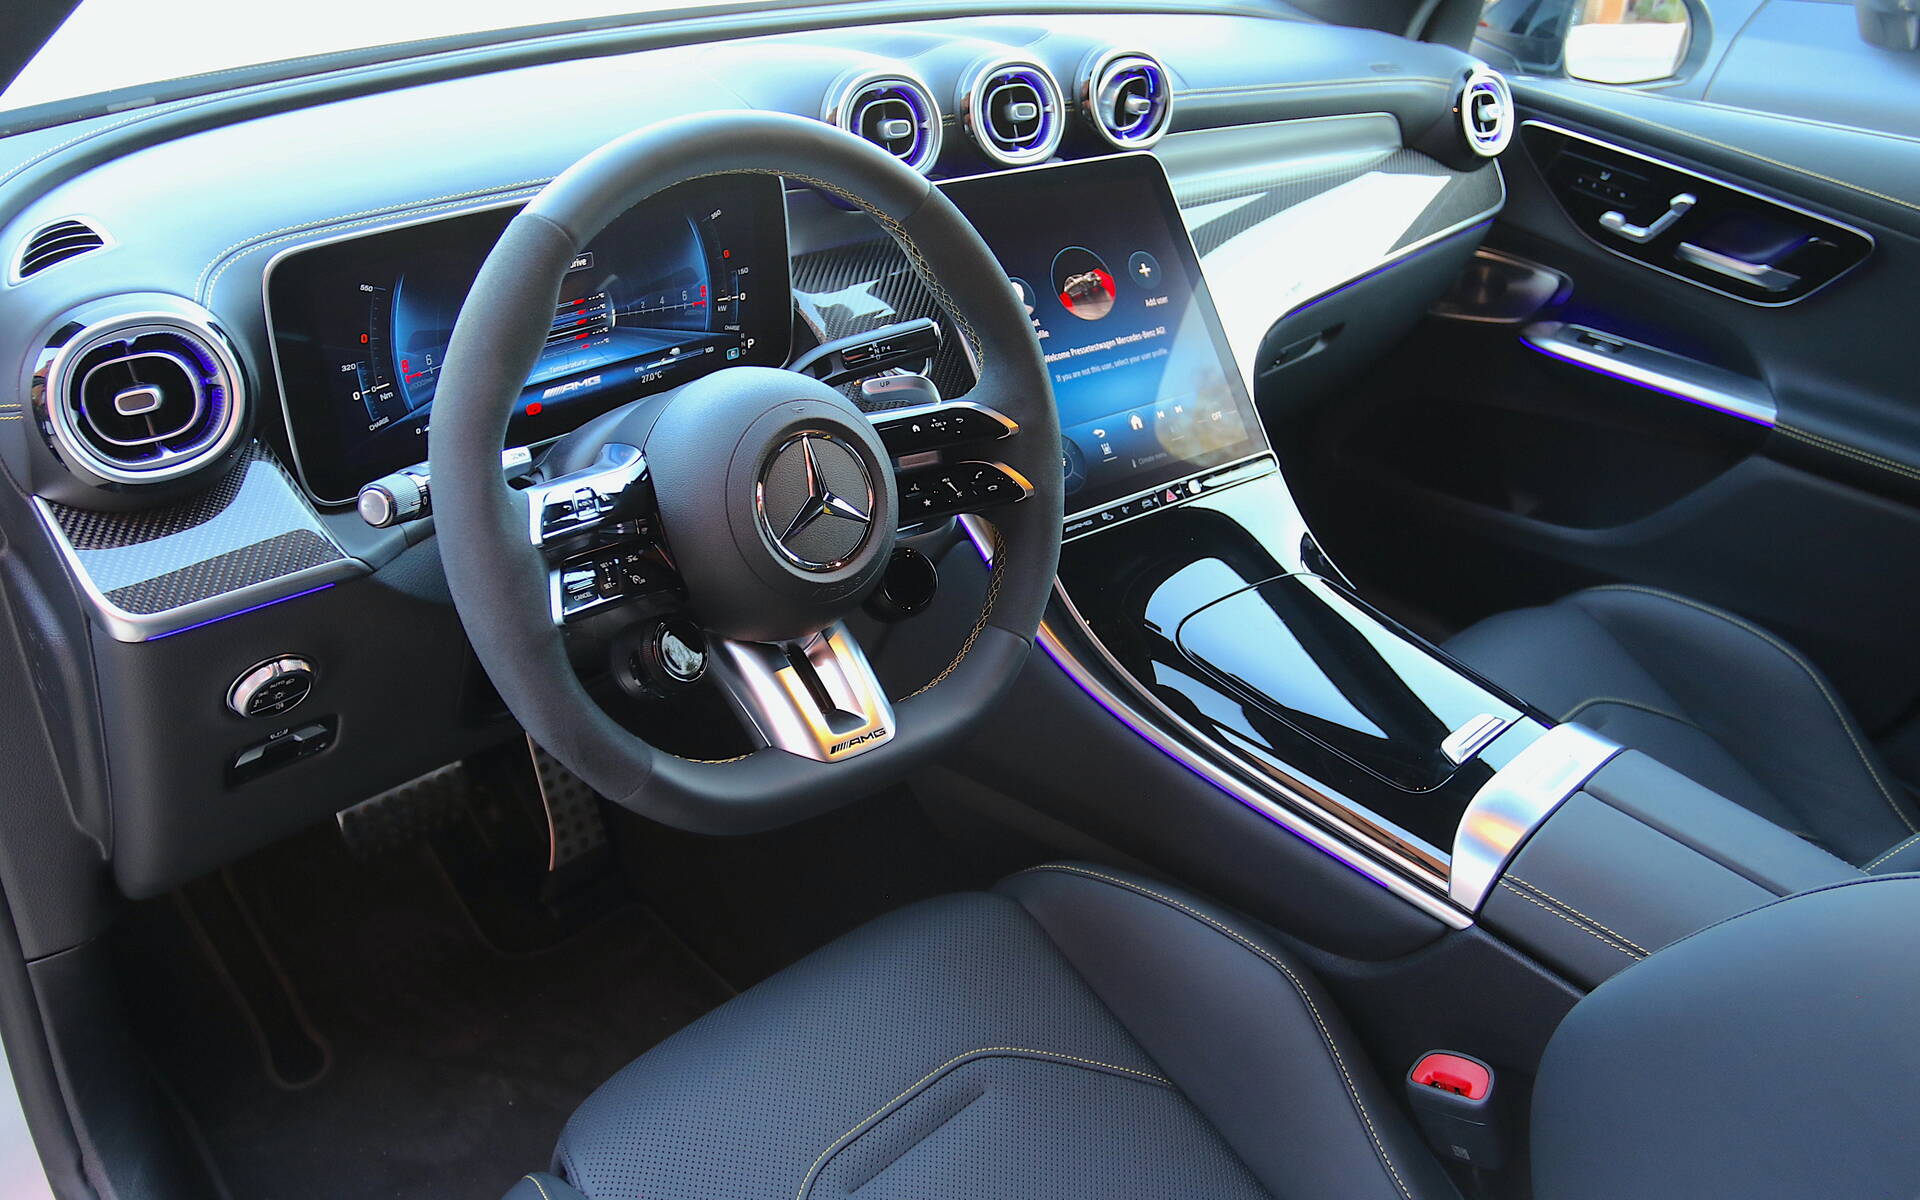 Mercedes-AMG GLC 63 S E Performance 2025 : débauche technologique 593227-mercedes-amg-63-s-e-performance-2025-debauche-technologique